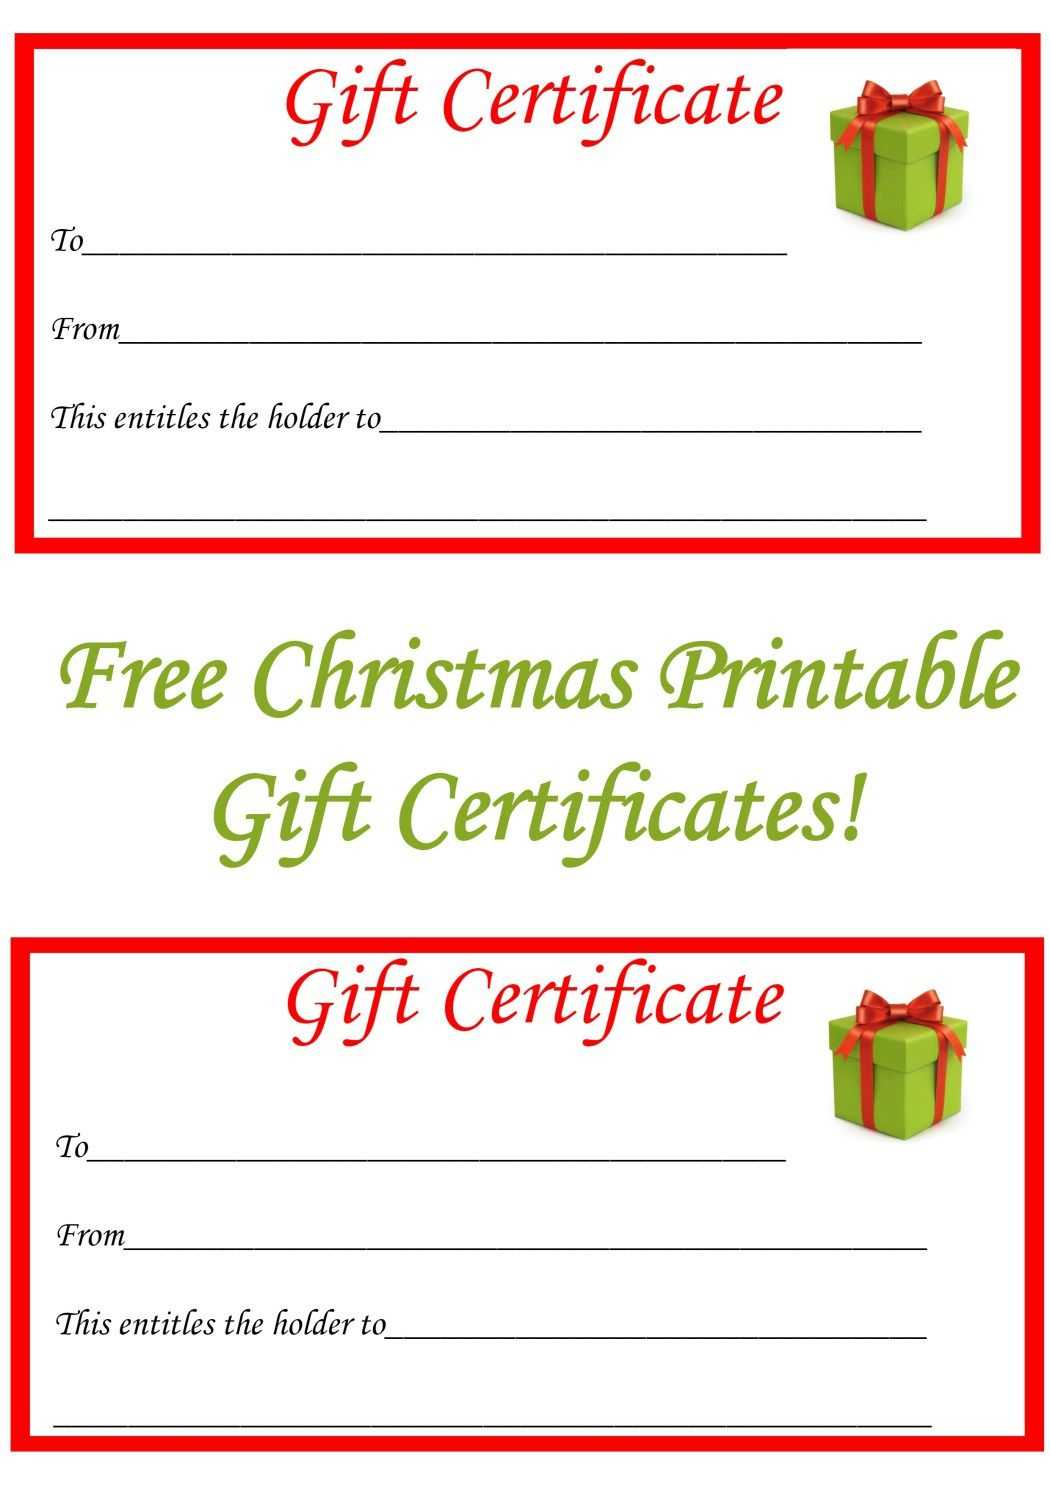 Free Christmas Printable Gift Certificates | Gift Ideas Intended For Printable Gift Certificates Templates Free